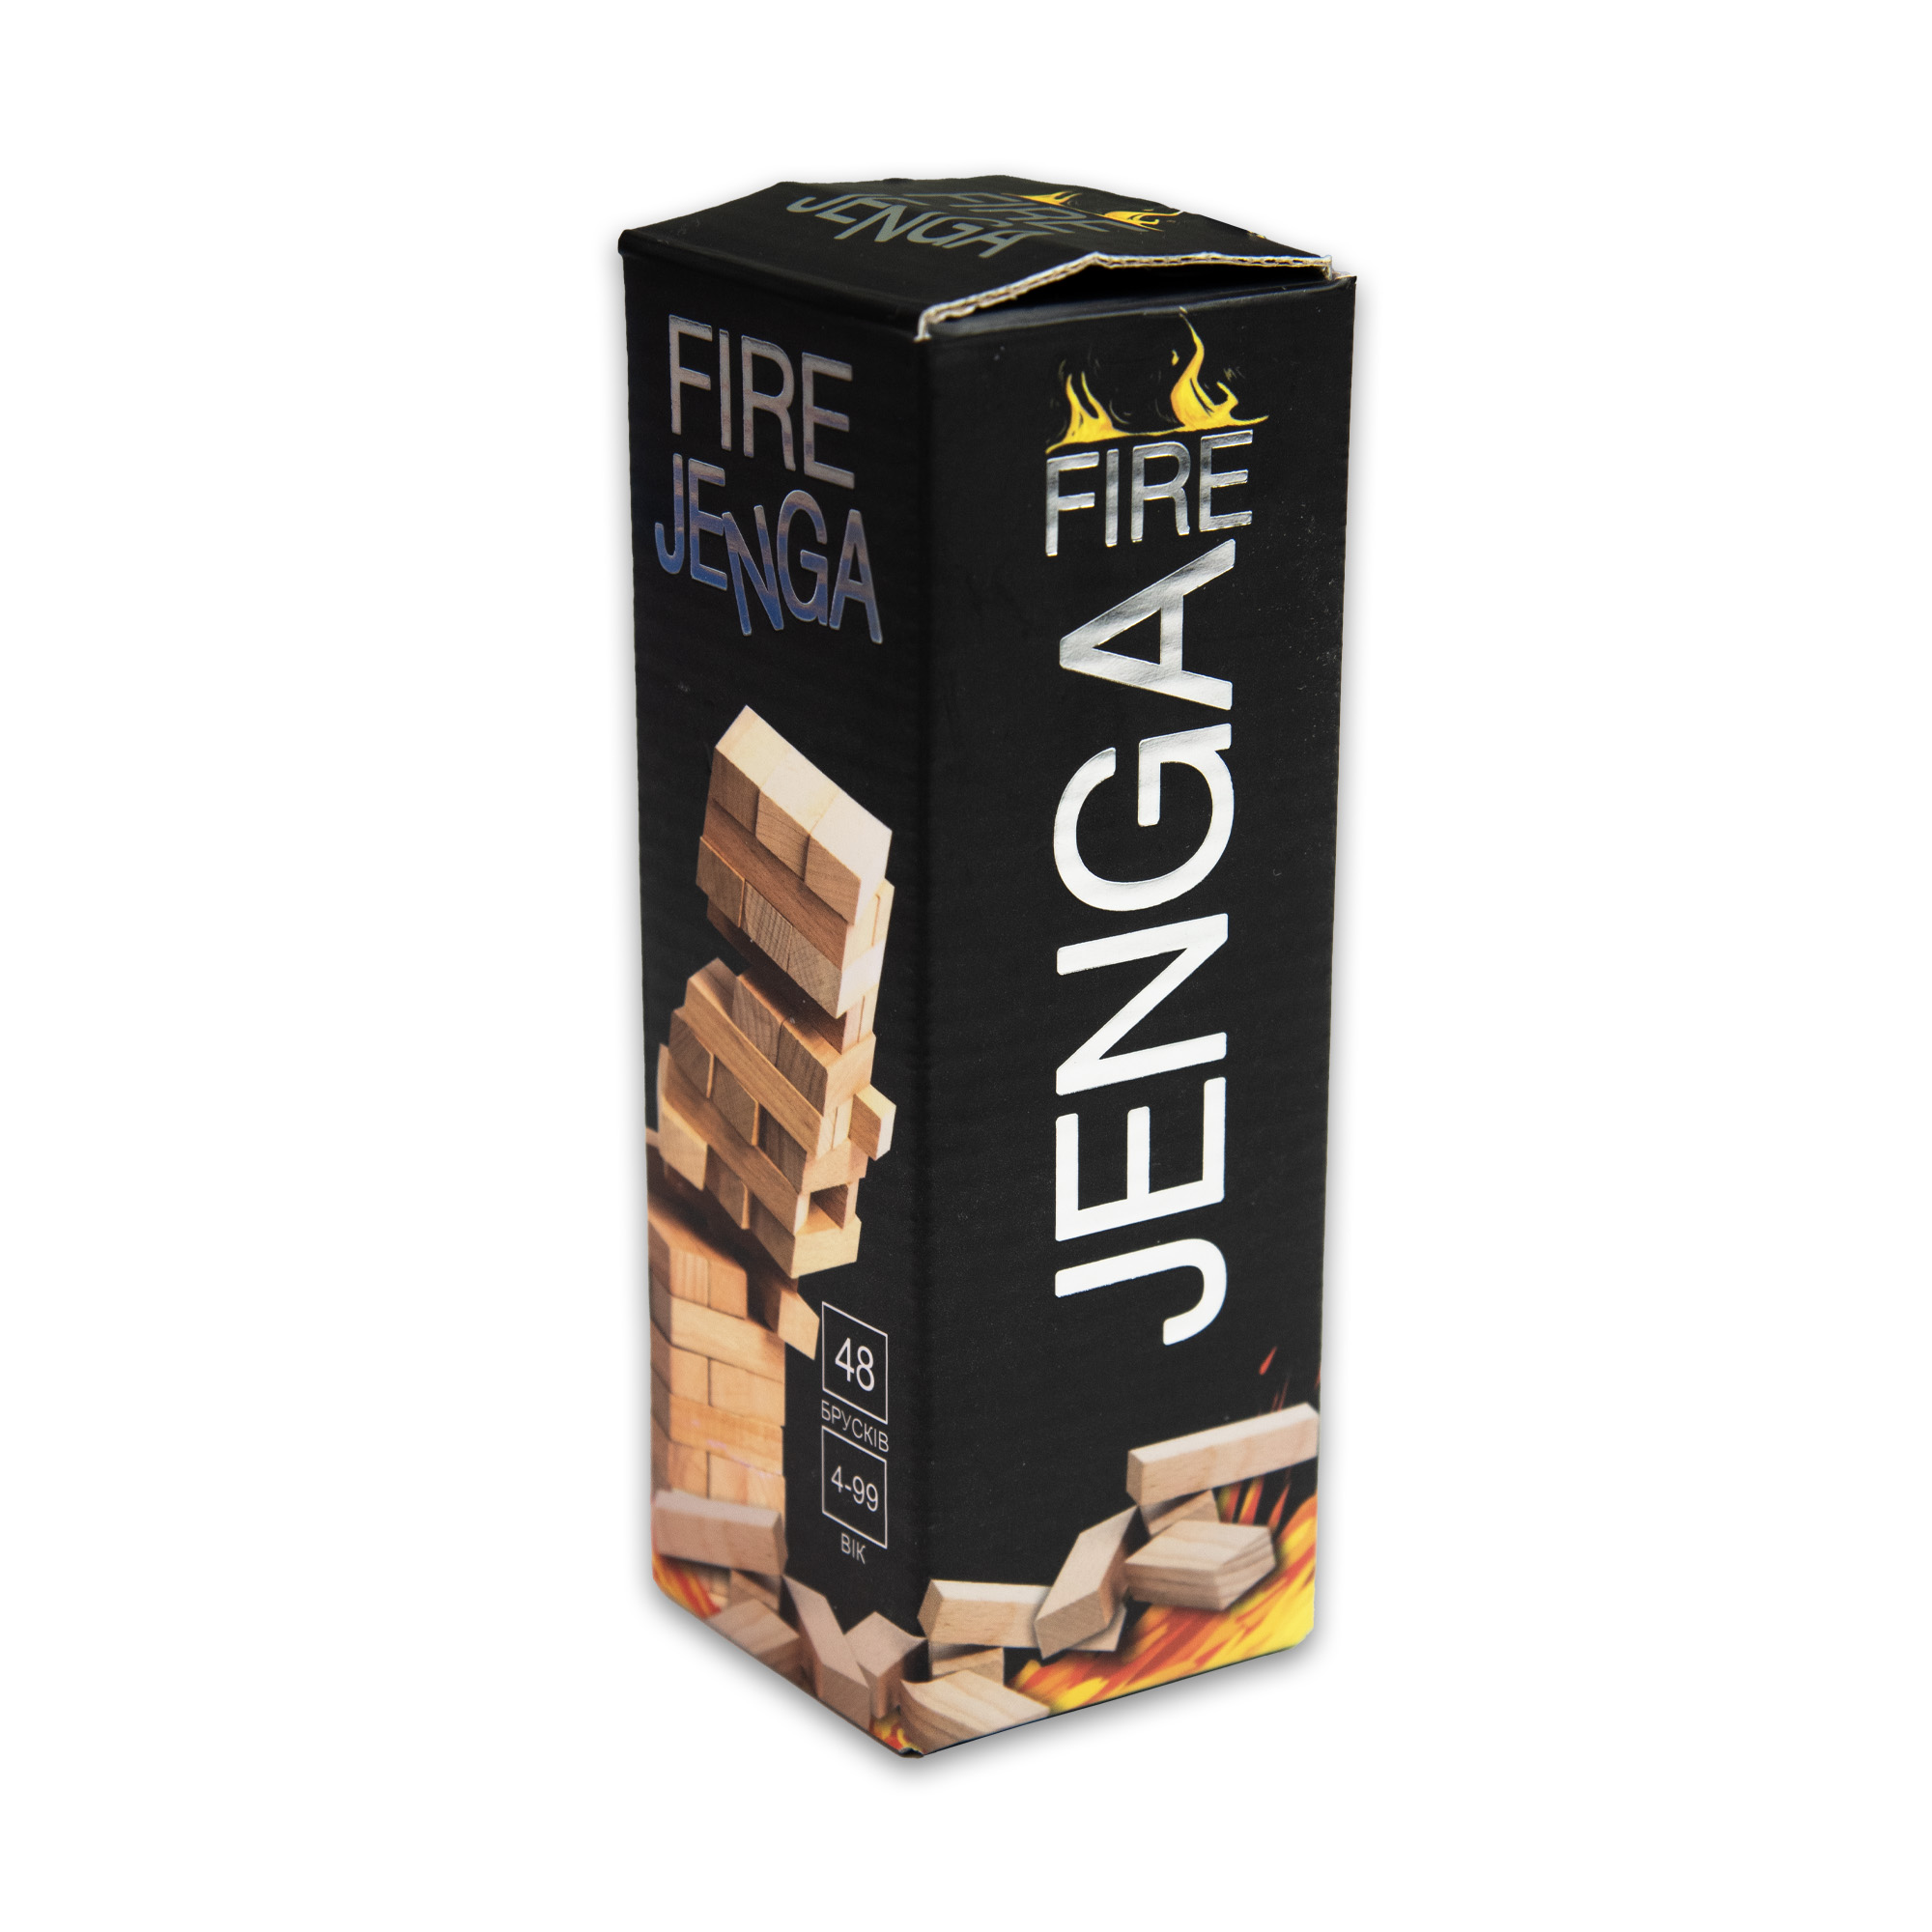 Board game "Fire Jenga" 45 bars (30848)